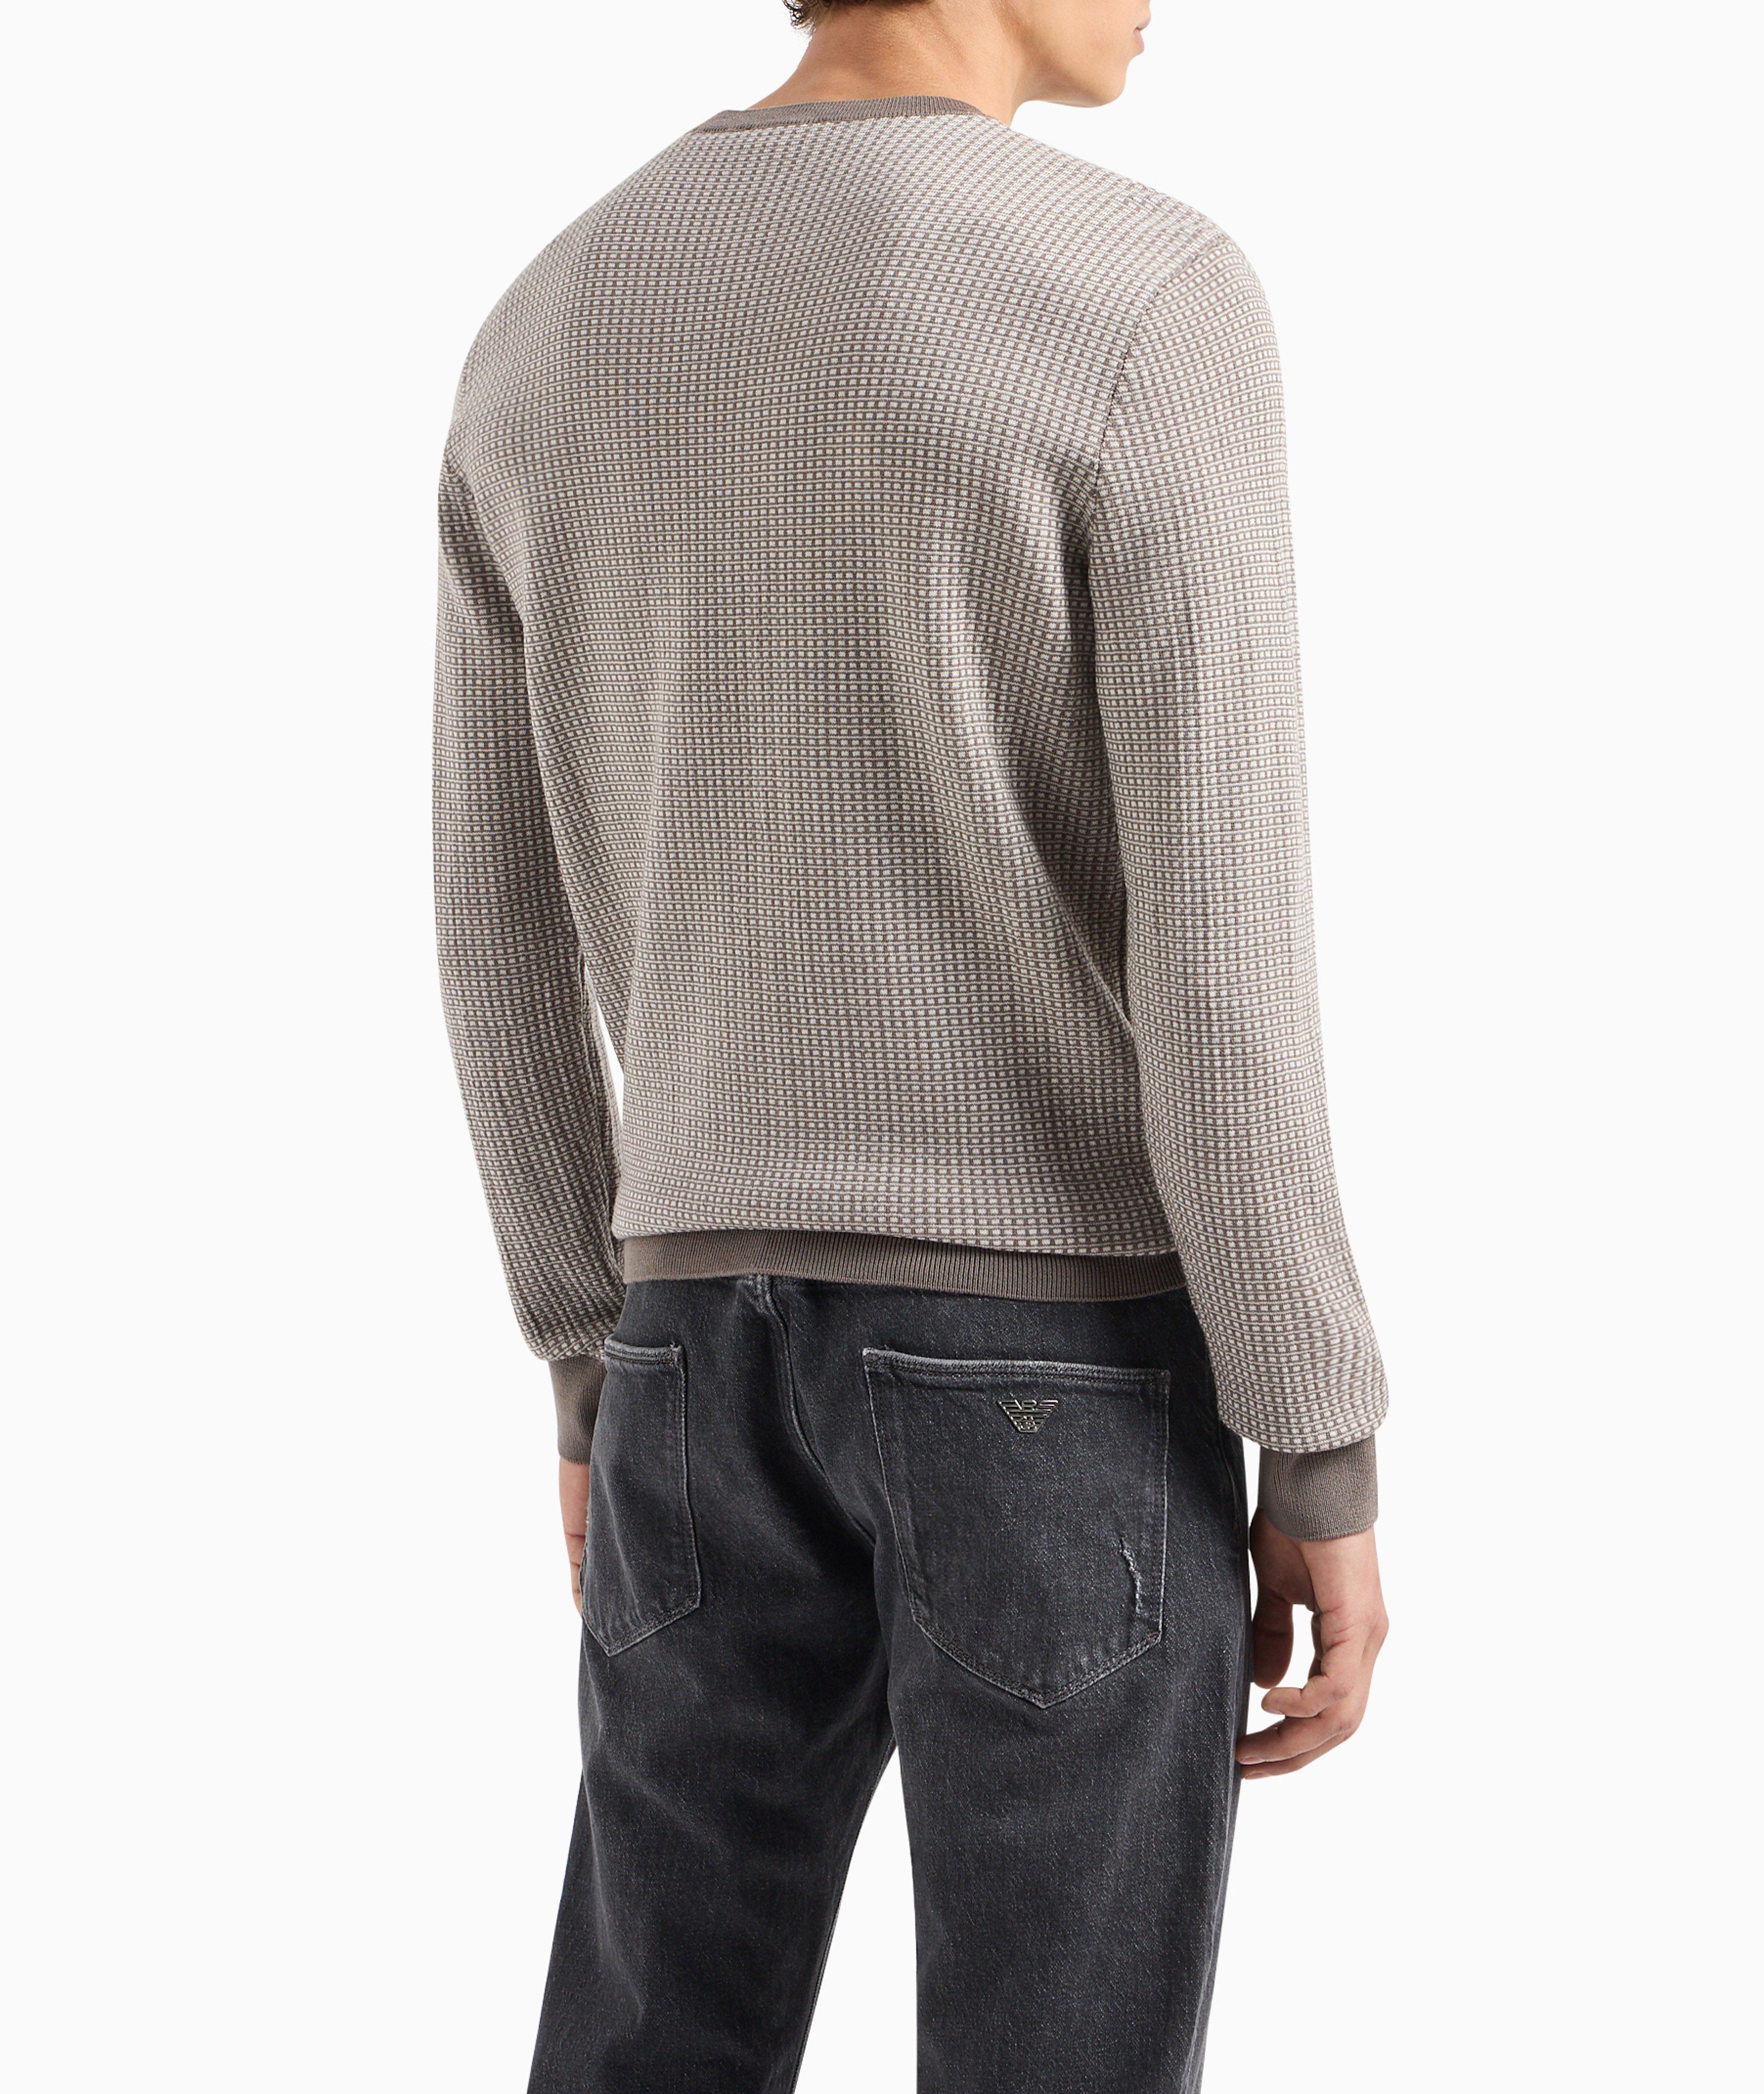 Striped Crewneck Sweater image 1